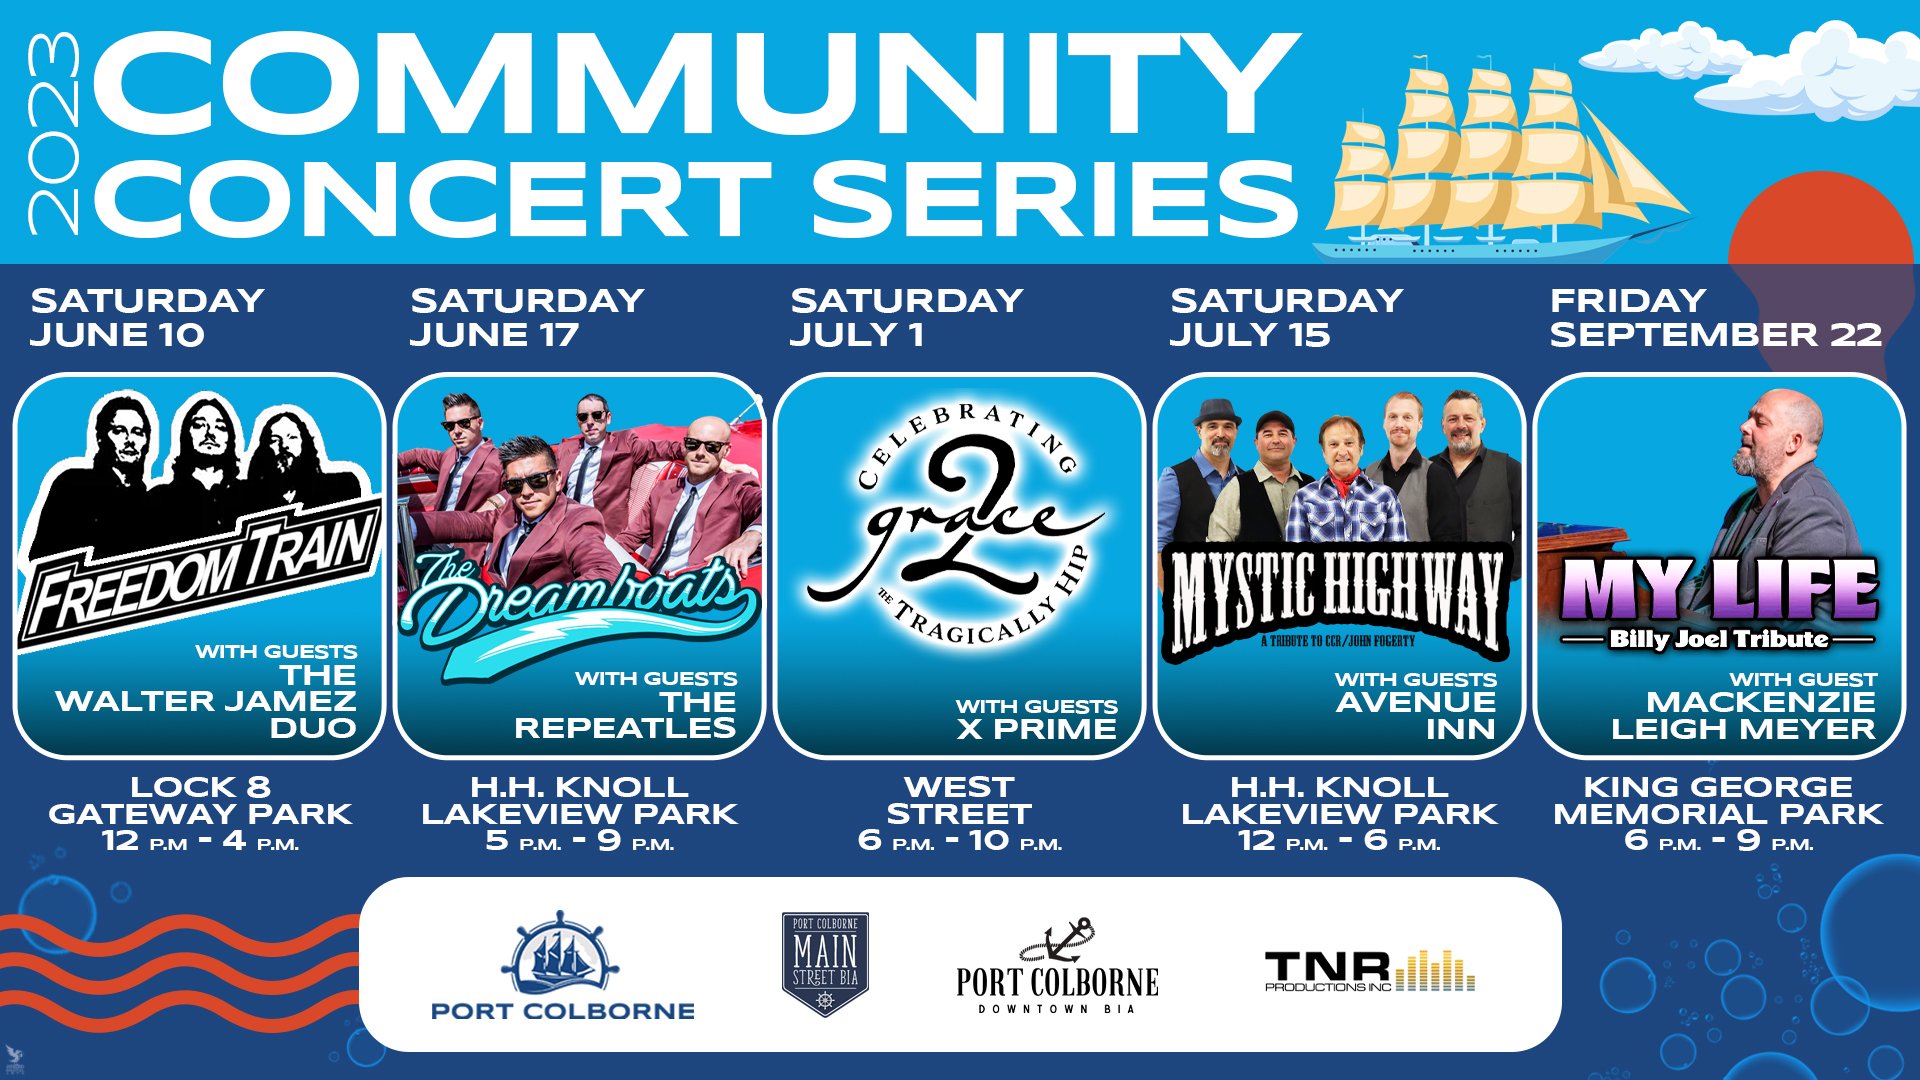 Concert Series - City of Port Colborne